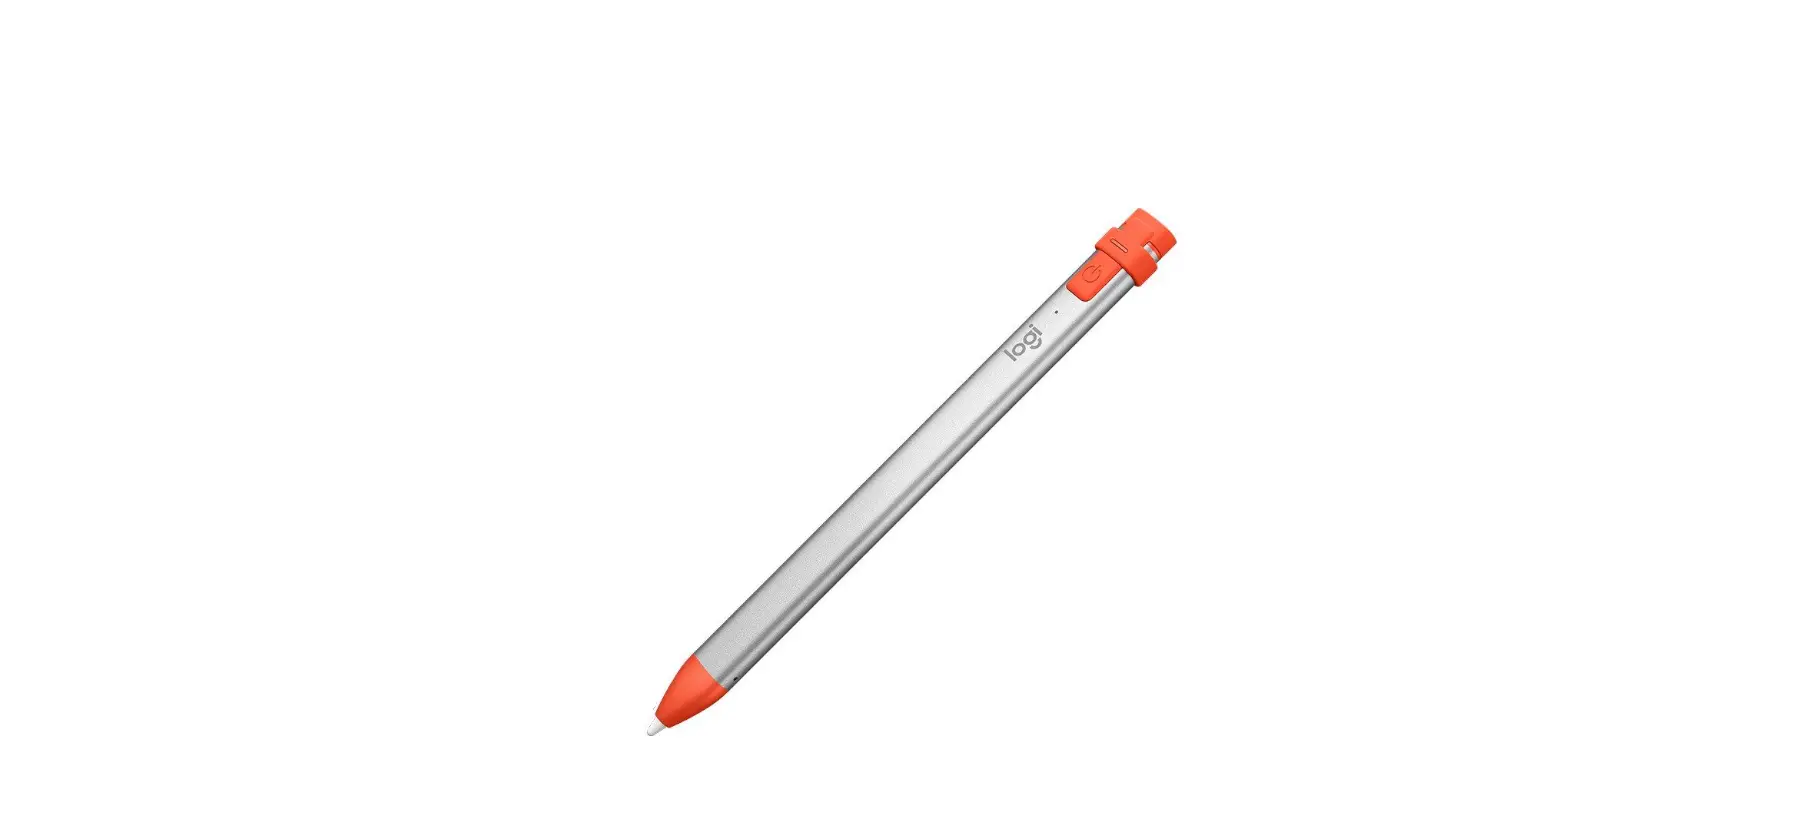 Crayon для iPad (914-000034)